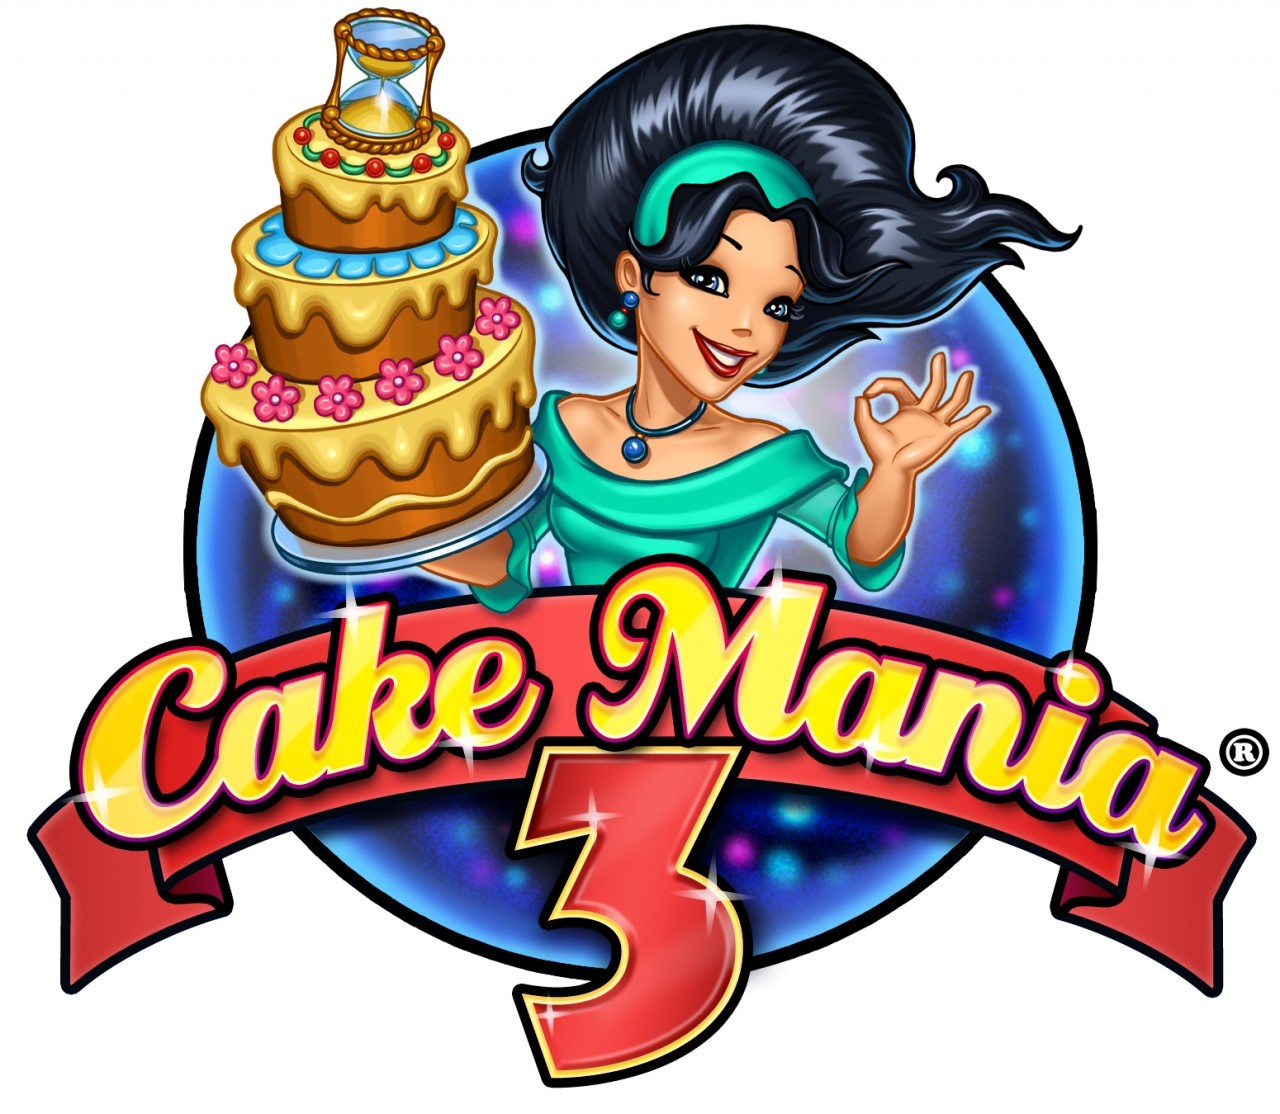 cake mania 3 free